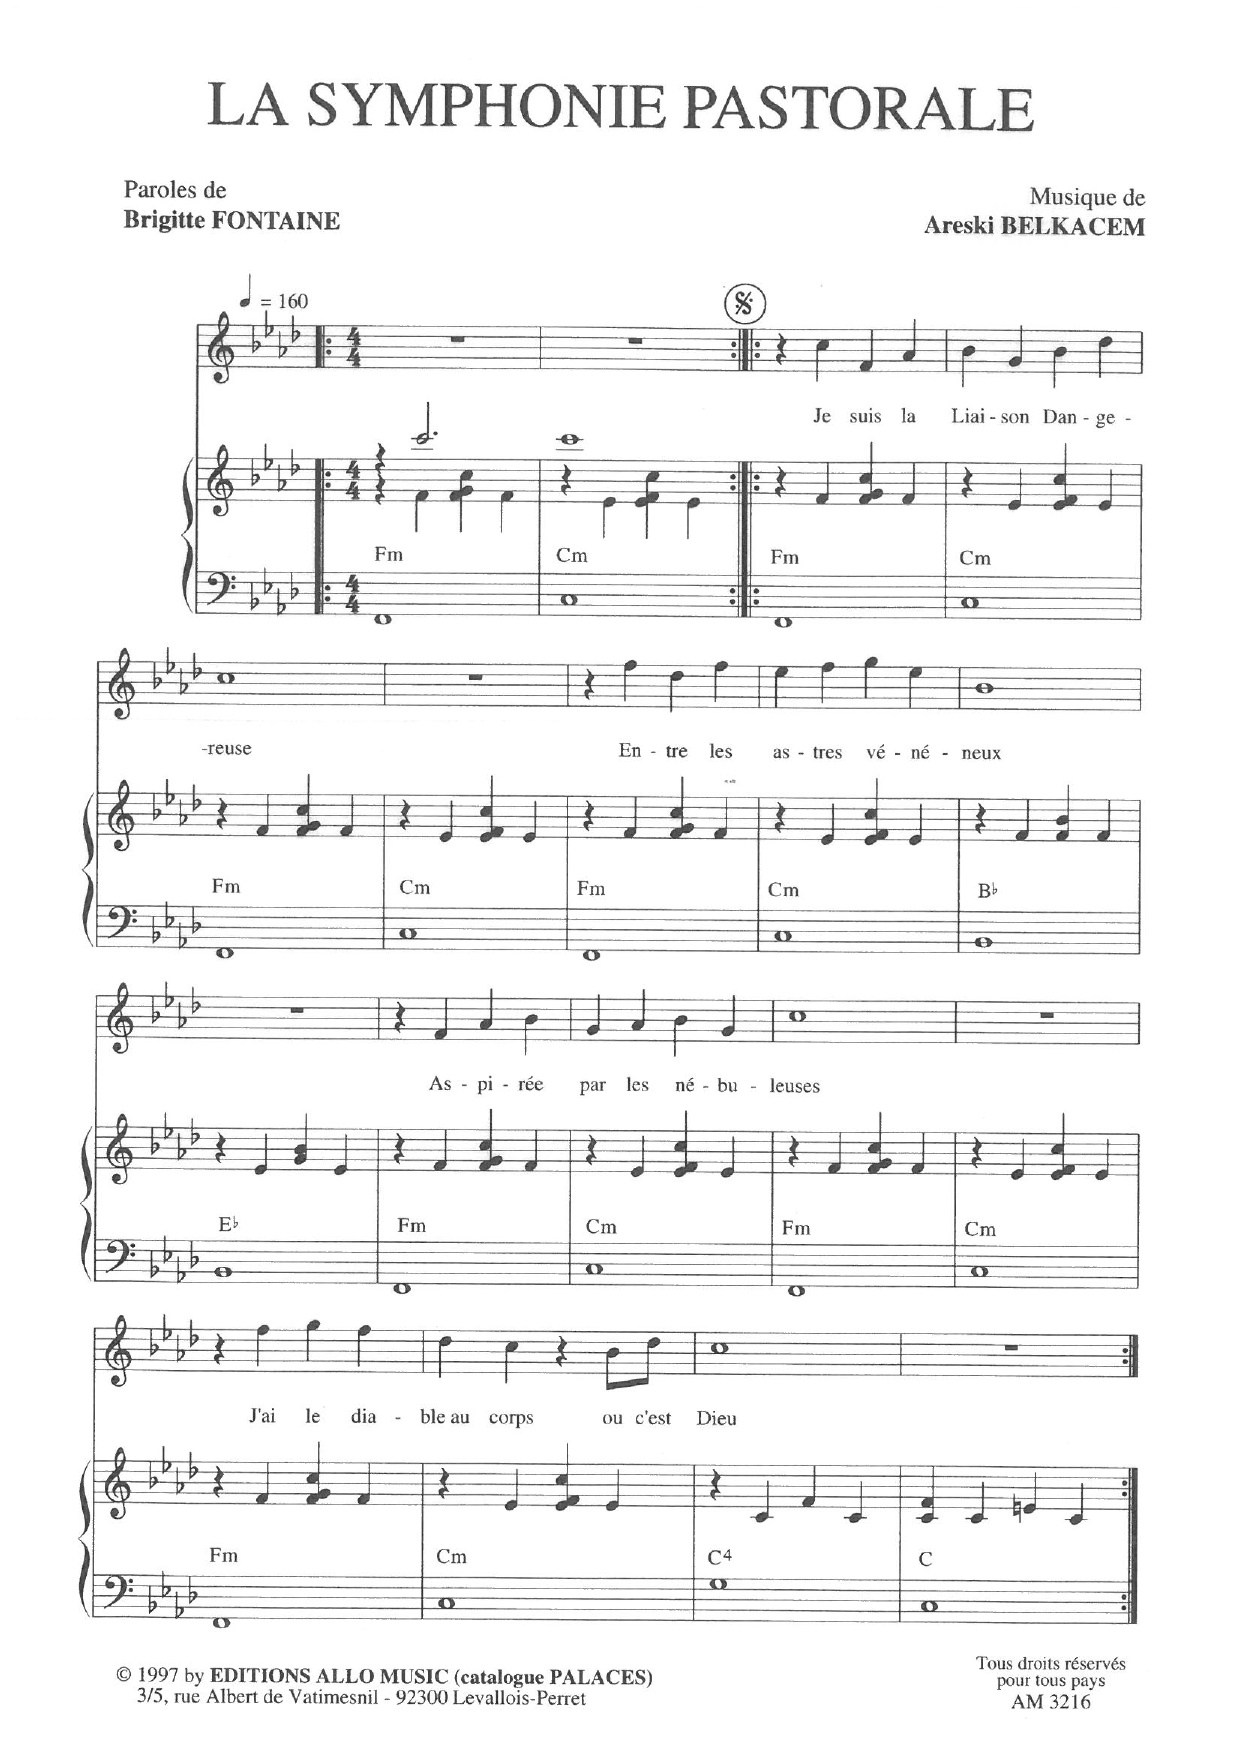 Brigitte Fontaine & Areski Belkacem La Symphonie Pastorale Sheet Music Notes & Chords for Piano & Vocal - Download or Print PDF